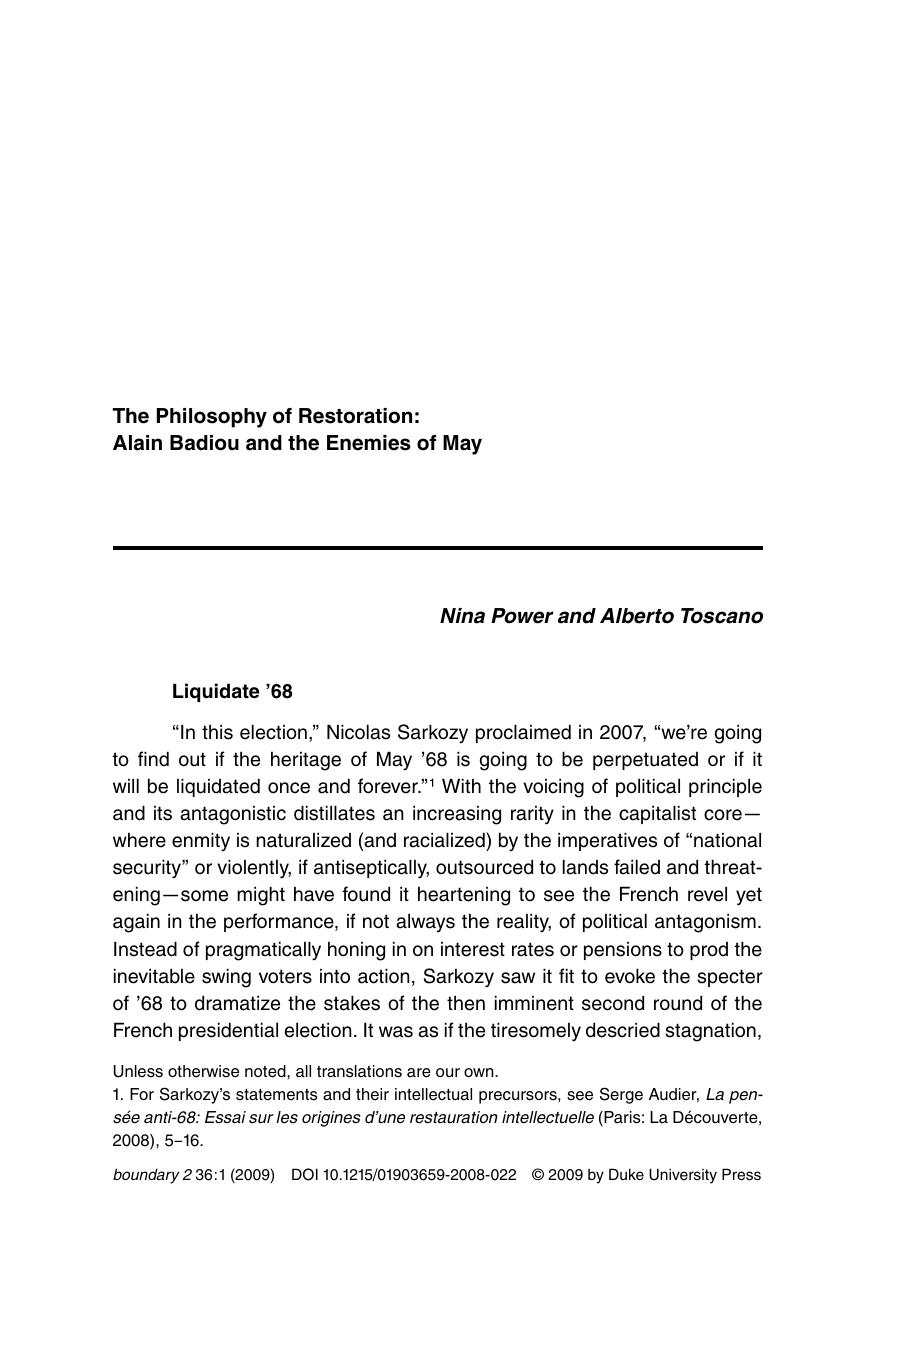 Philosophy Of Restoration - Alain Badiou and the Enemies of May - Translation